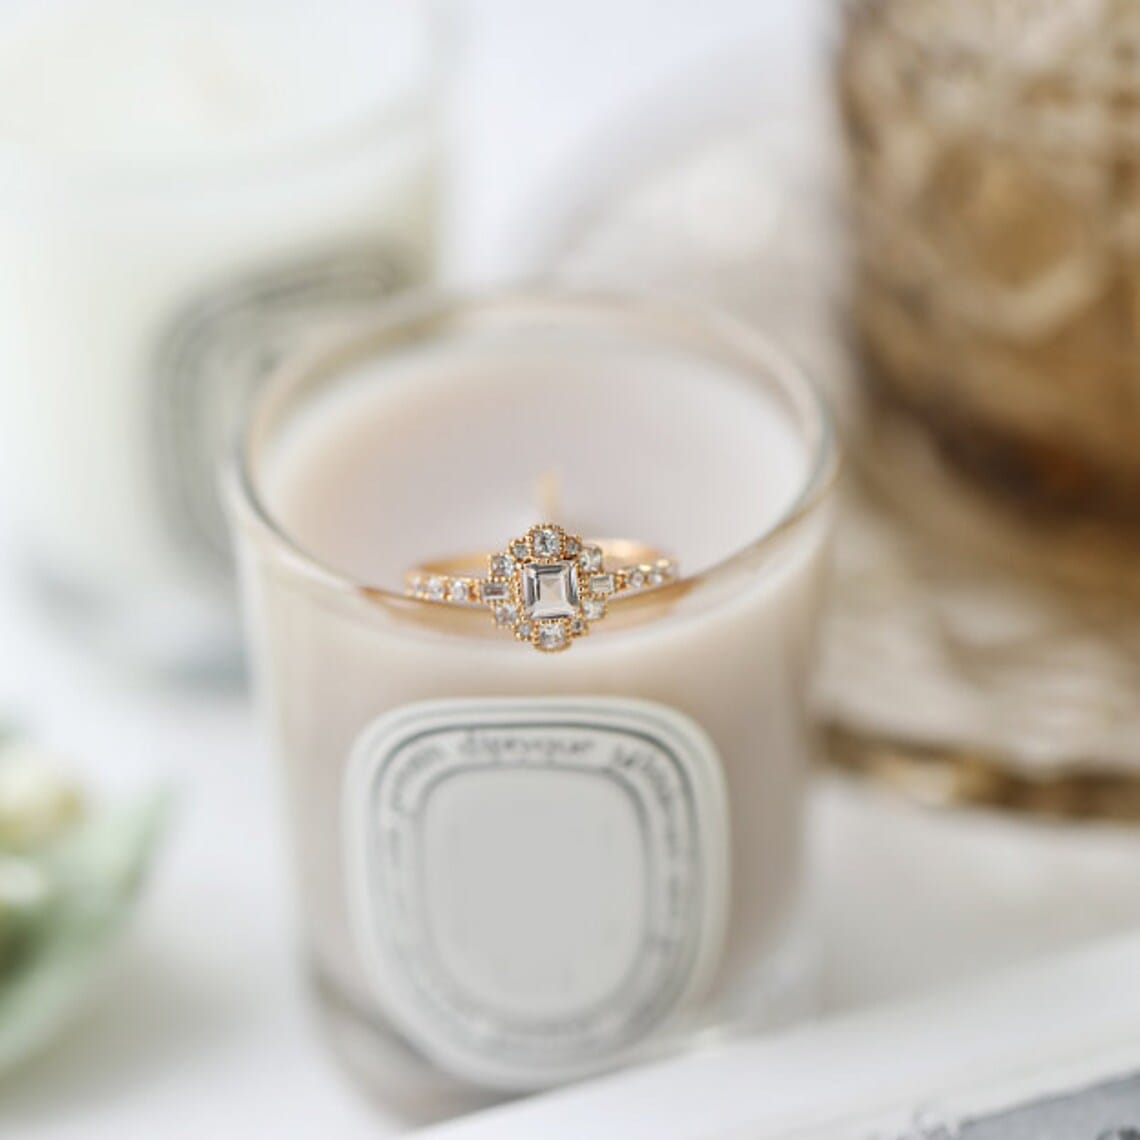 white quartz ring in vintage setting